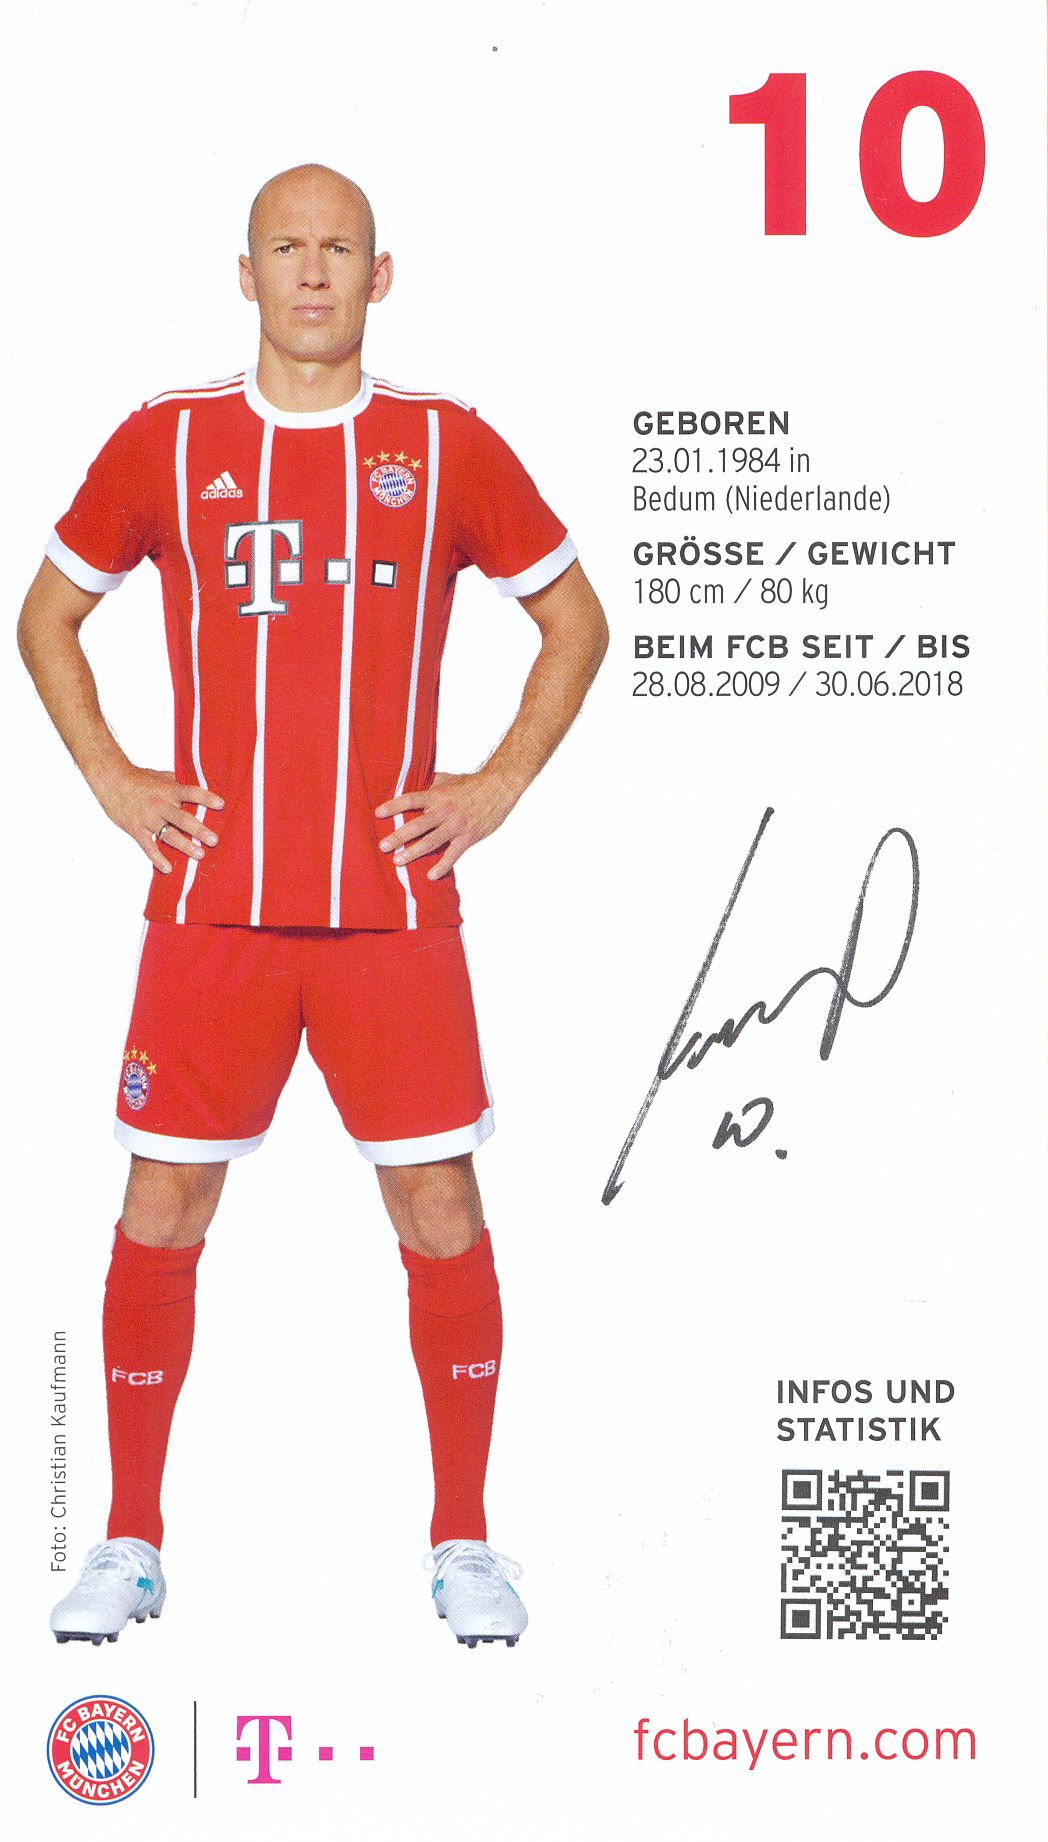 66800 Arjen Robben FC Bayern München unsignierte Autogrammkarte Werbekarte 